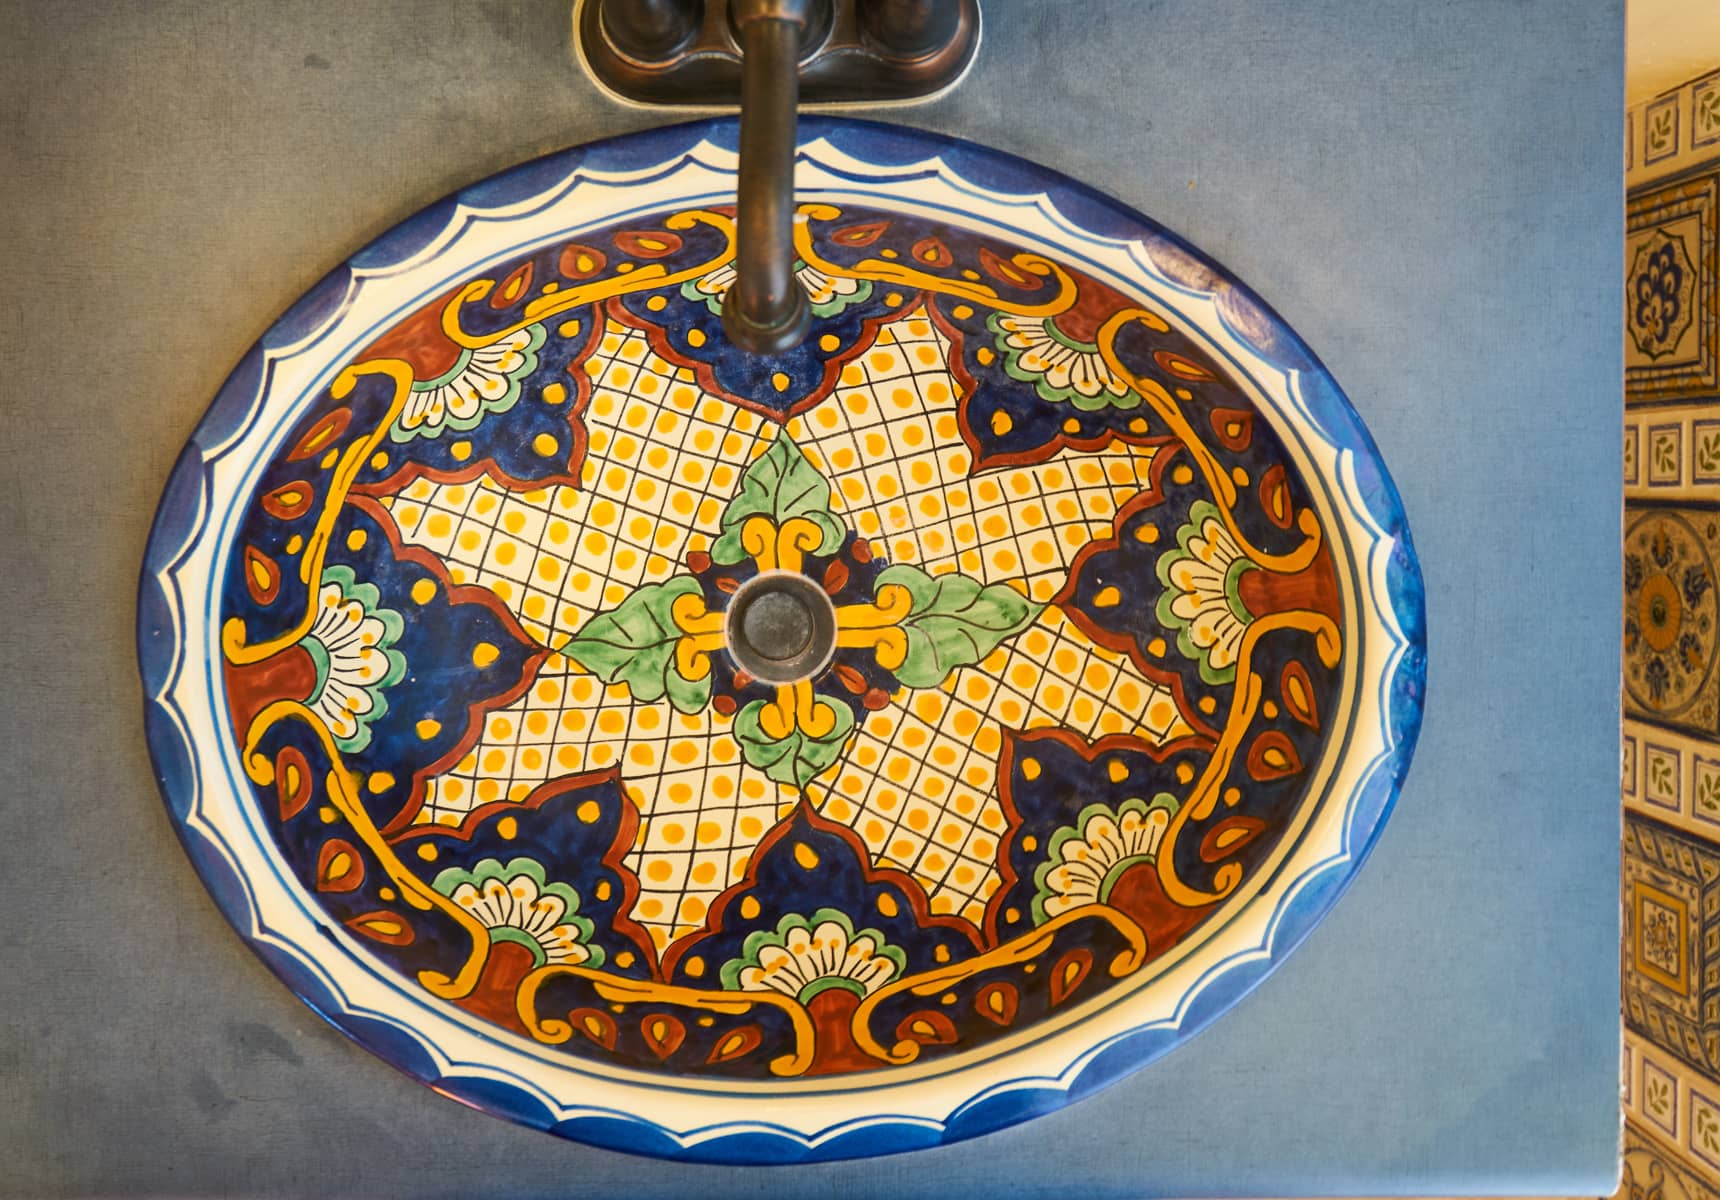 Elaborate tiled sink in the Mariposa bathrrom